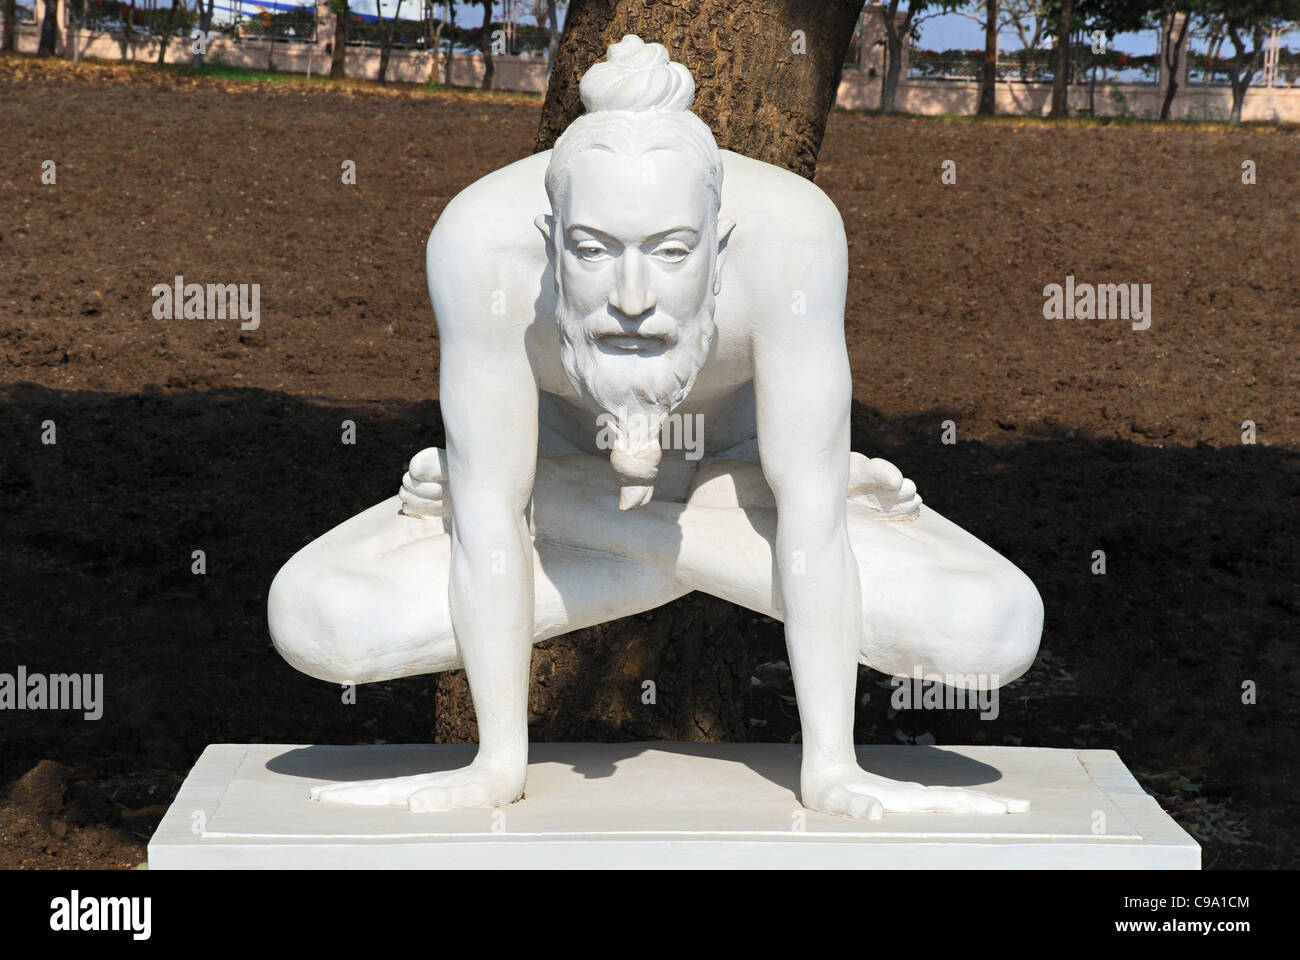 A statue showing yoga position, Anand Sagar Garden Complex, Shegaon, Maharashtra State, India. Stock Photo